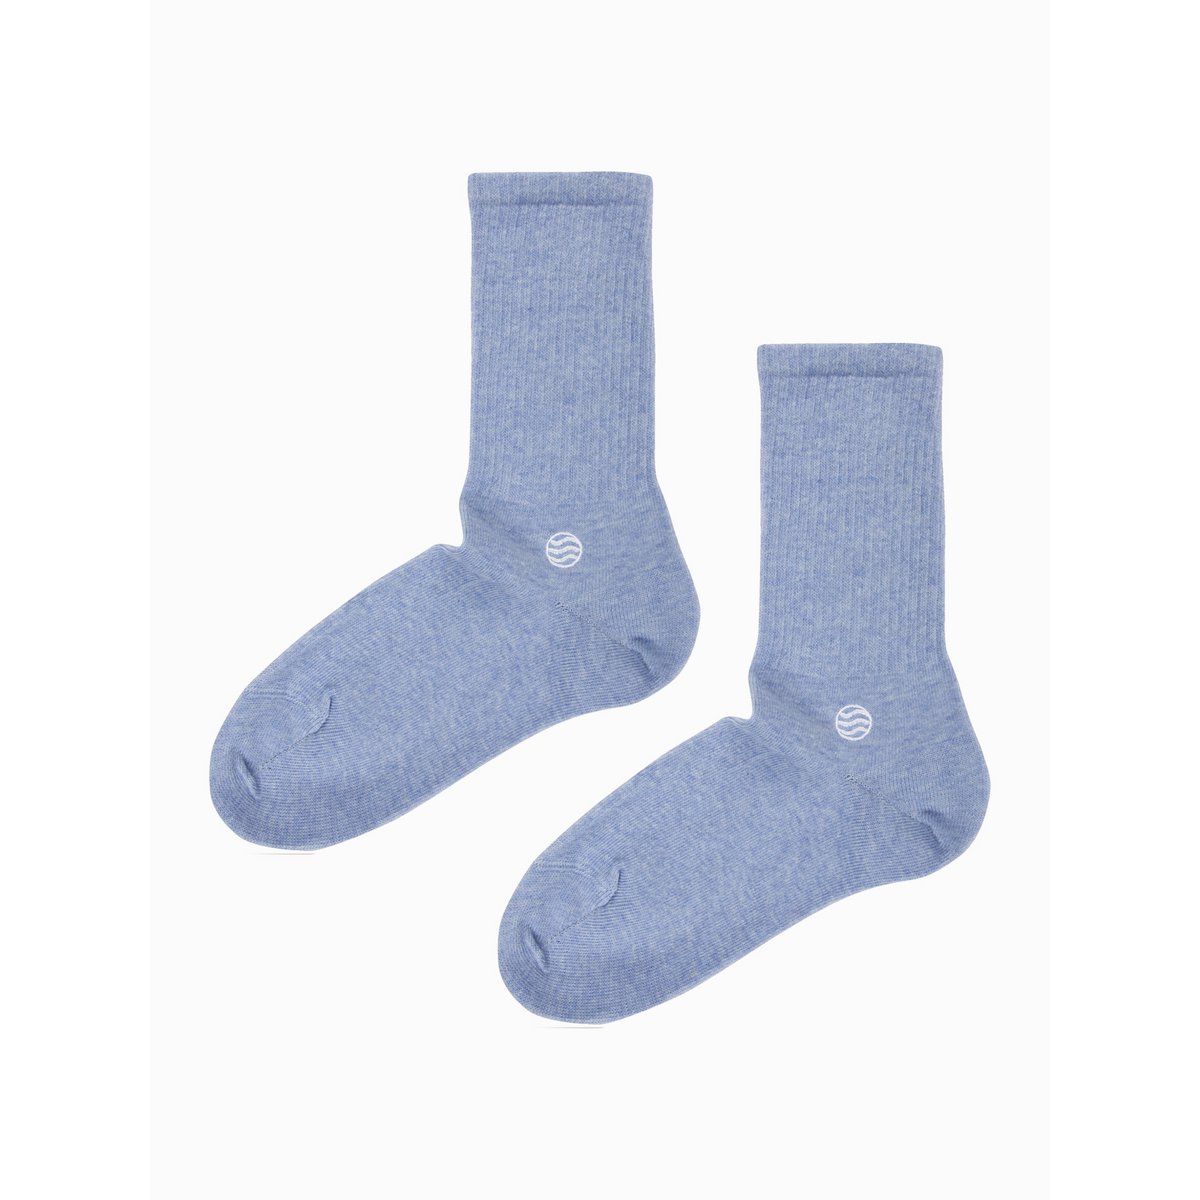 2er Pack Light Blue Retro Socken - perfekt für jeden Style!